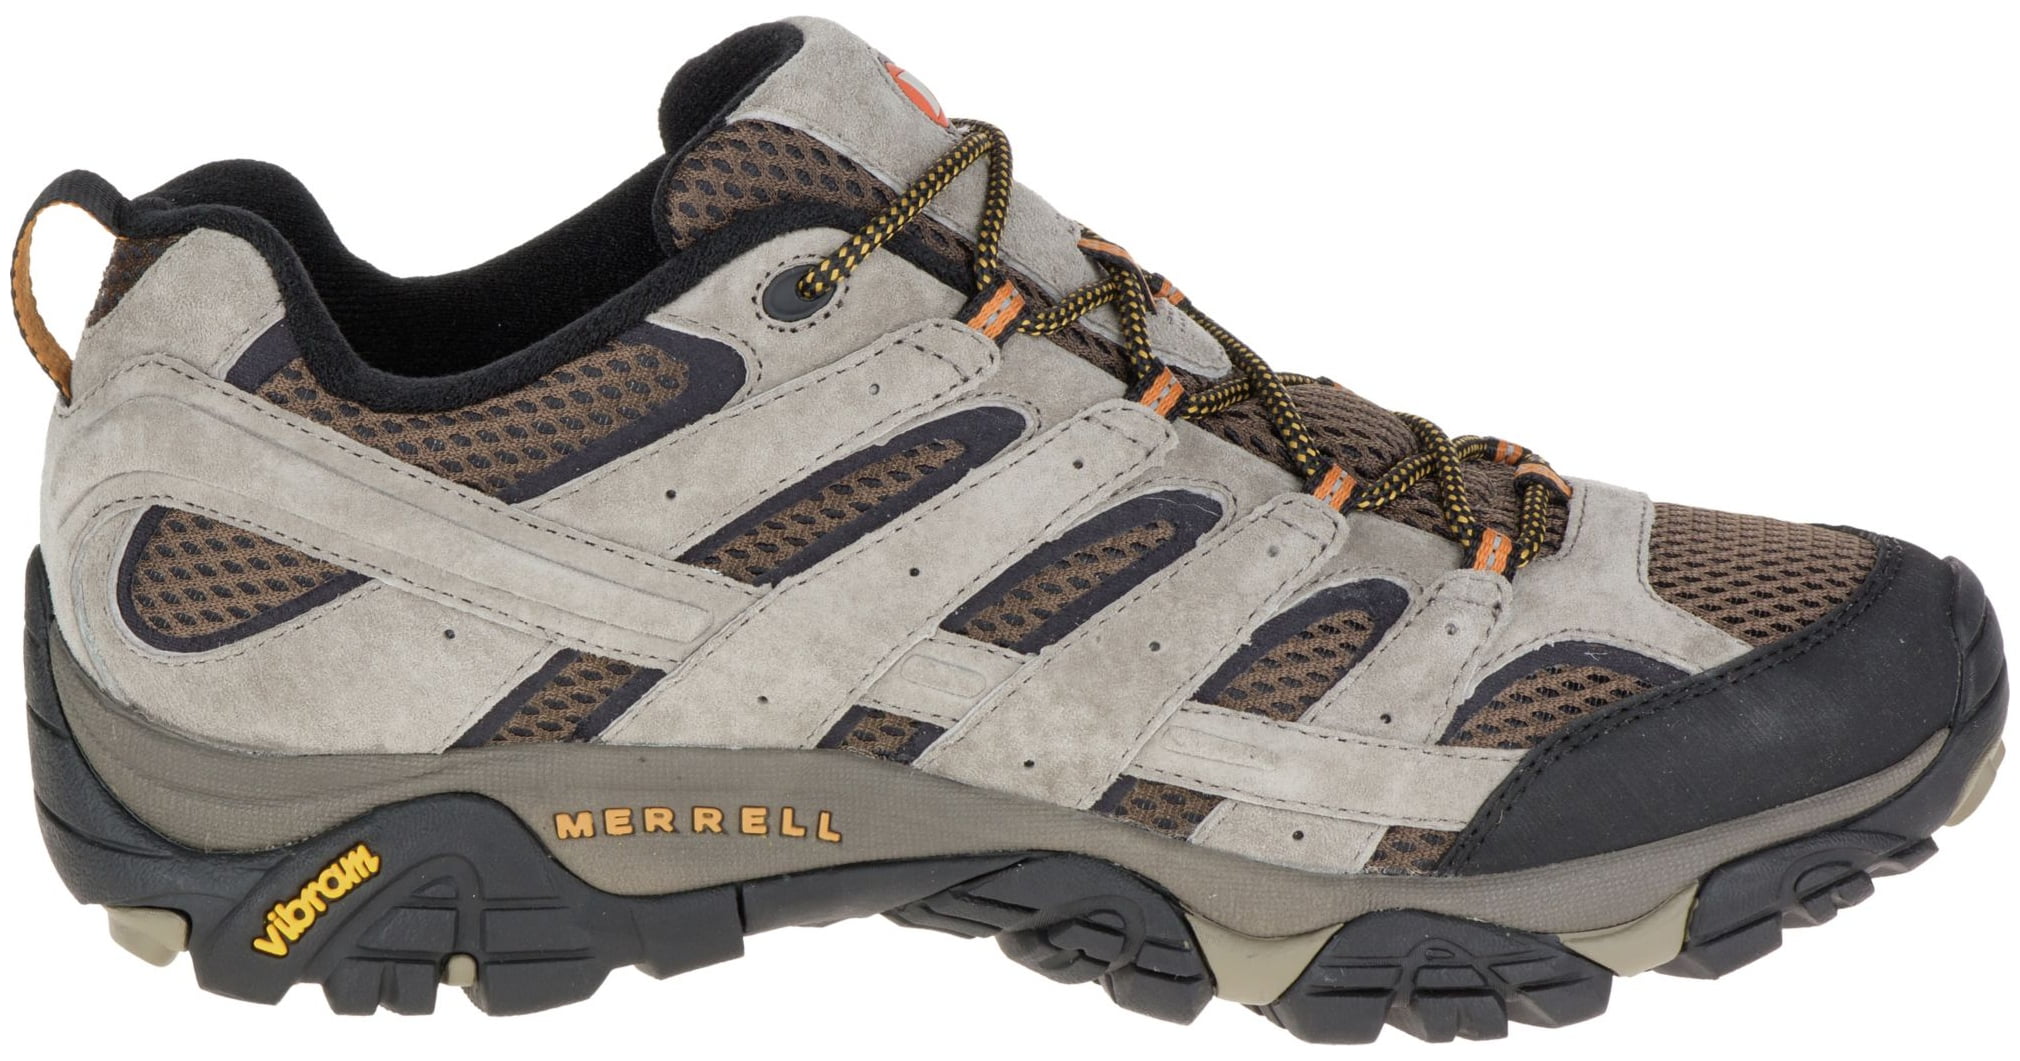 Merrell - Merrell Men's Moab 2 Ventilator Hiking Shoes (Walnut, 7.0 ...